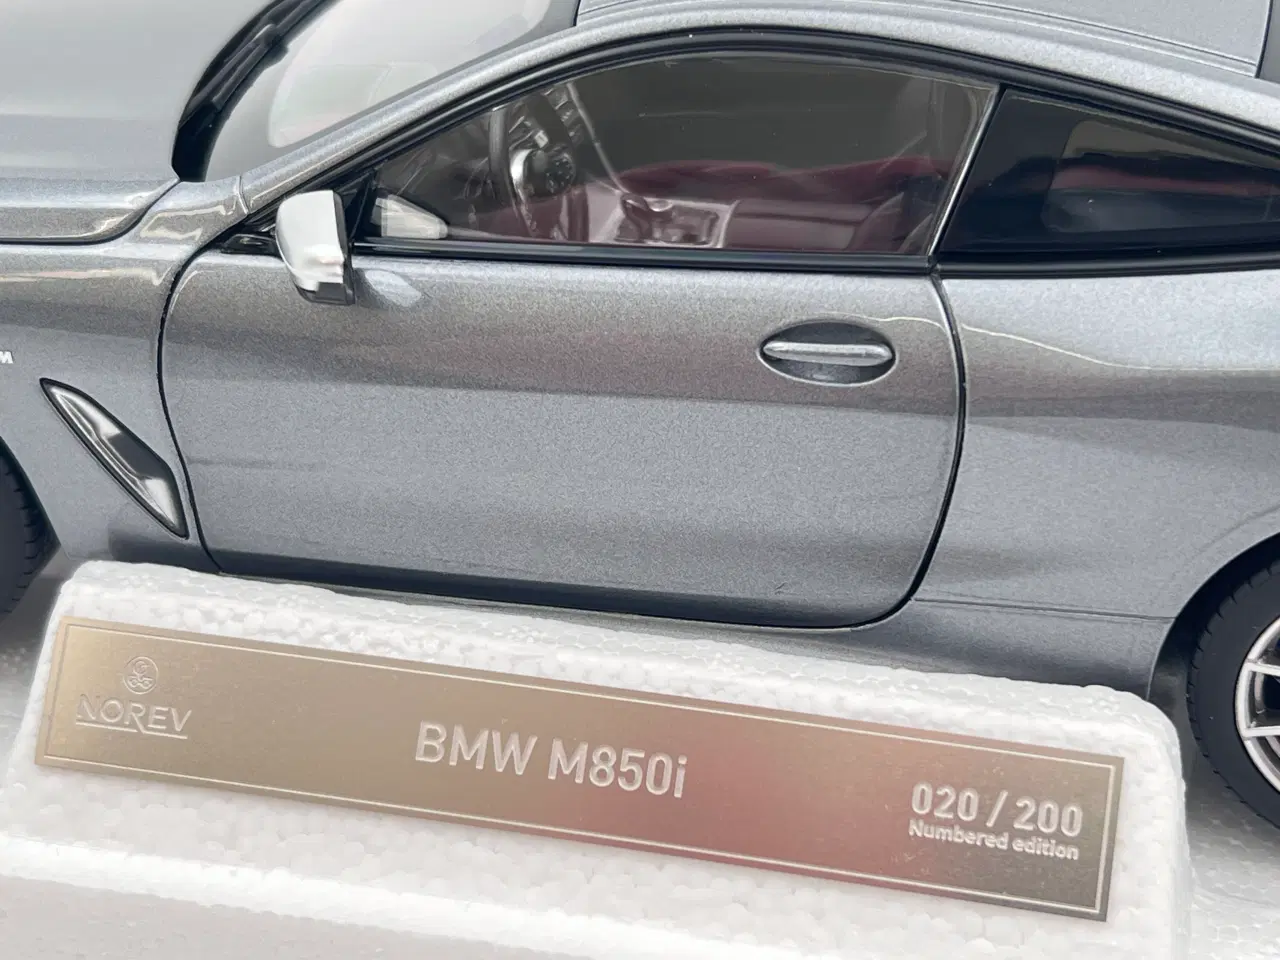 Billede 2 - 2018 BMW M850i Coupe 1:18  Limited Edition 20/200